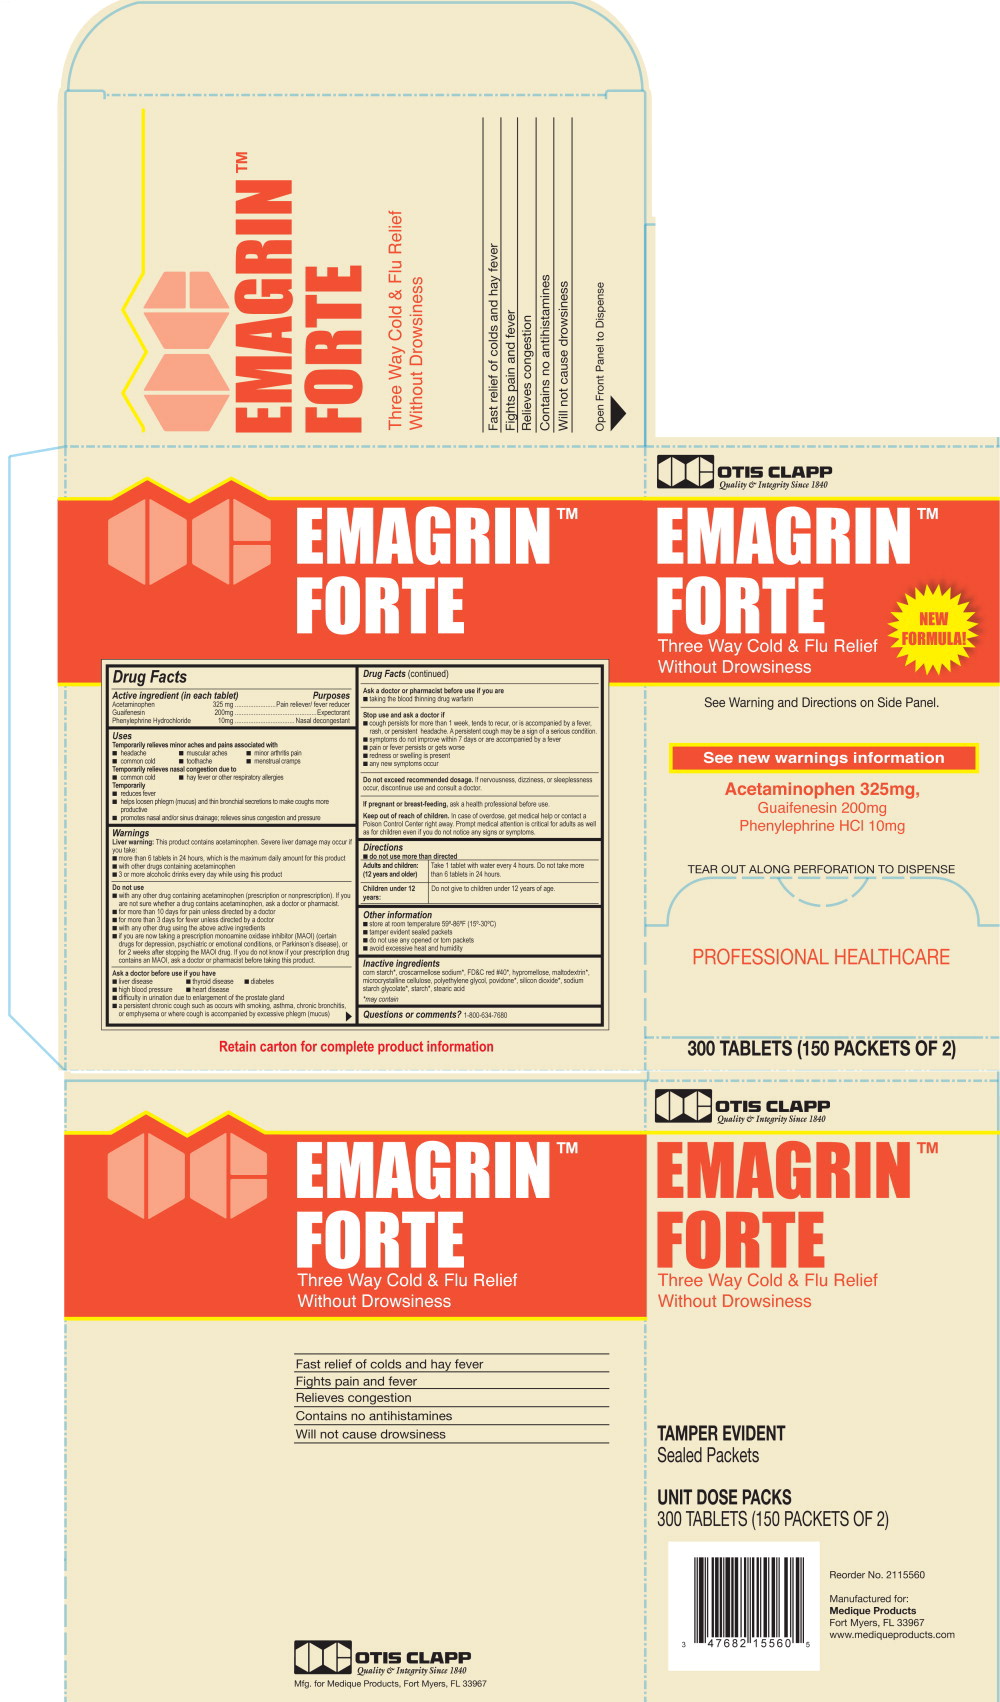 105R Otis Clapp Emagrin Forte Label
